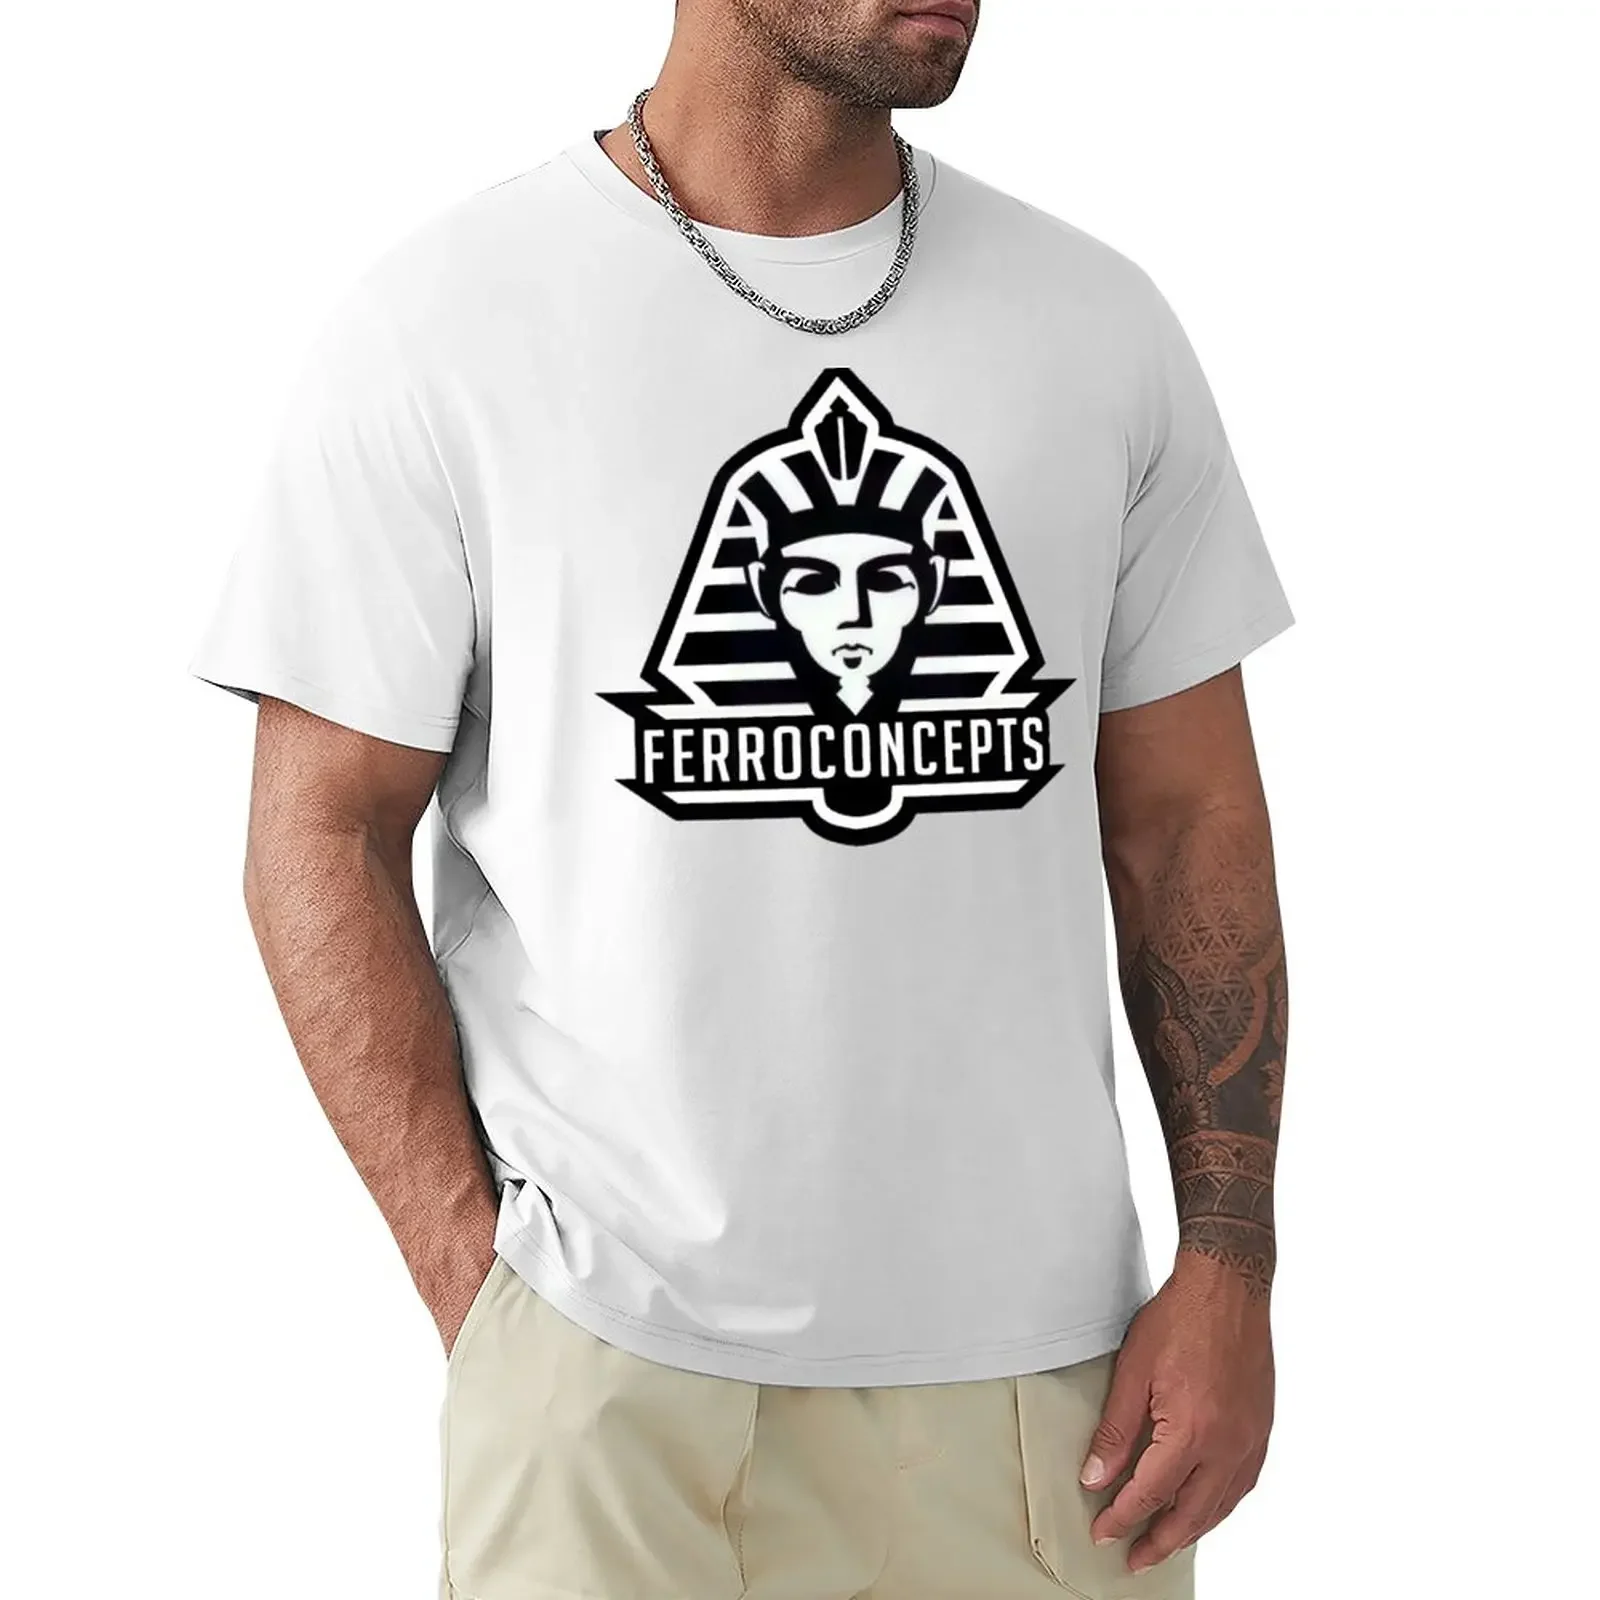 

FERRO CONCEPTS T-Shirt Blouse tees mens workout shirts